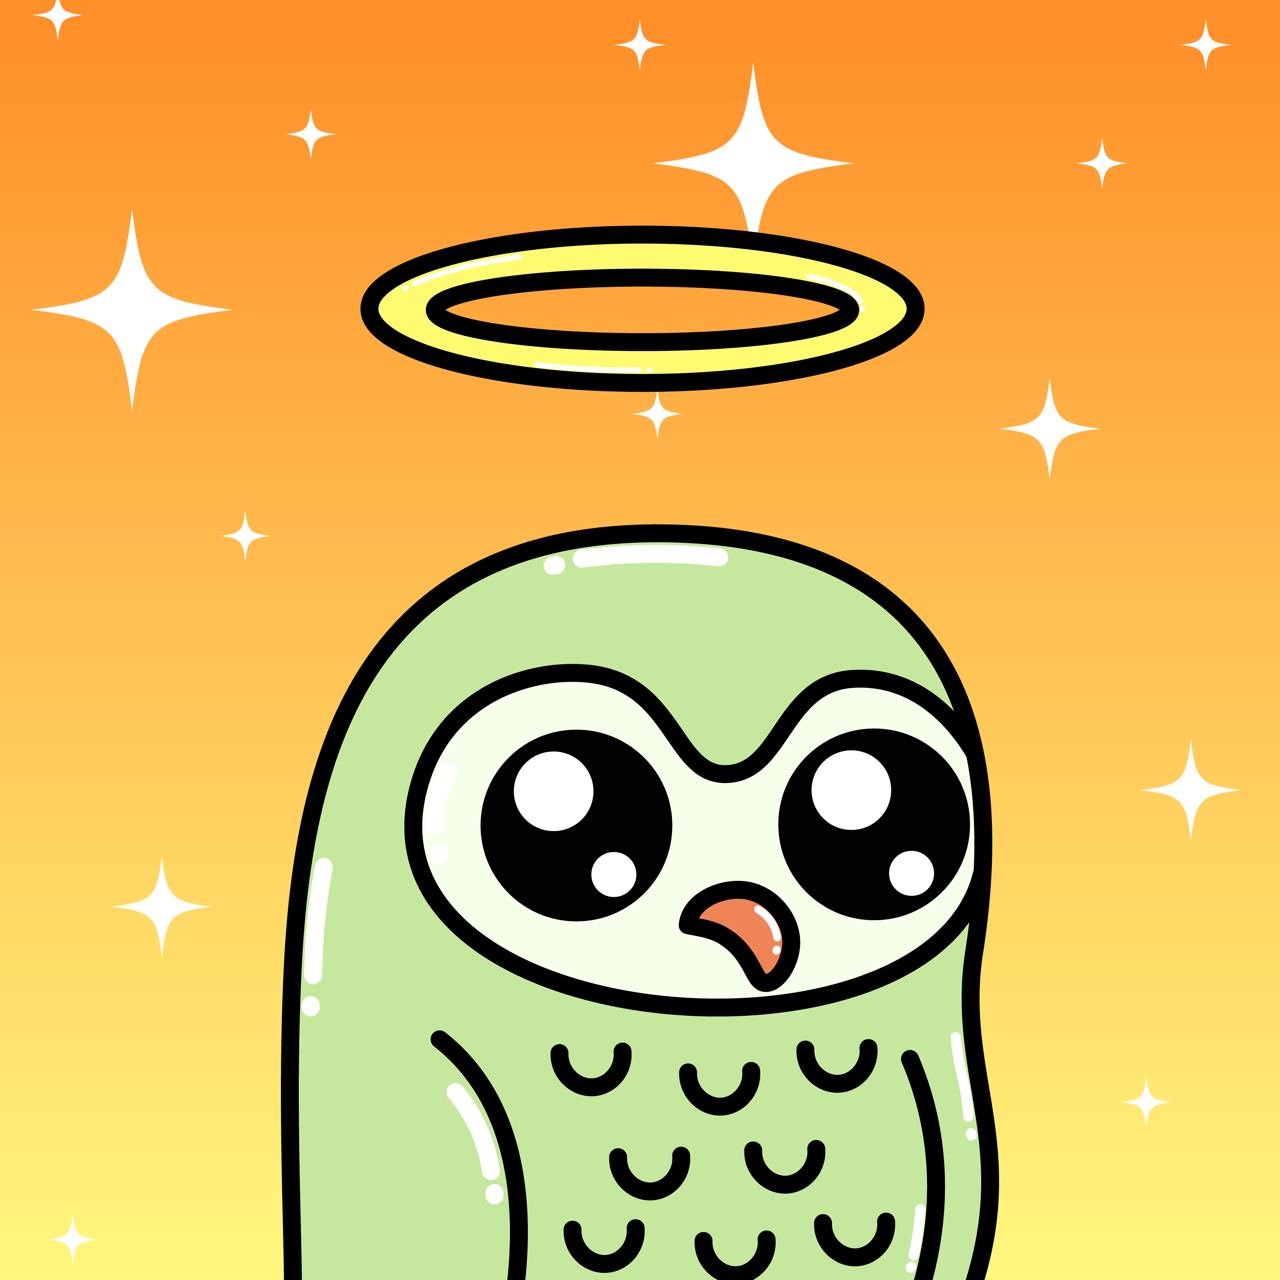 Superb Owls icon